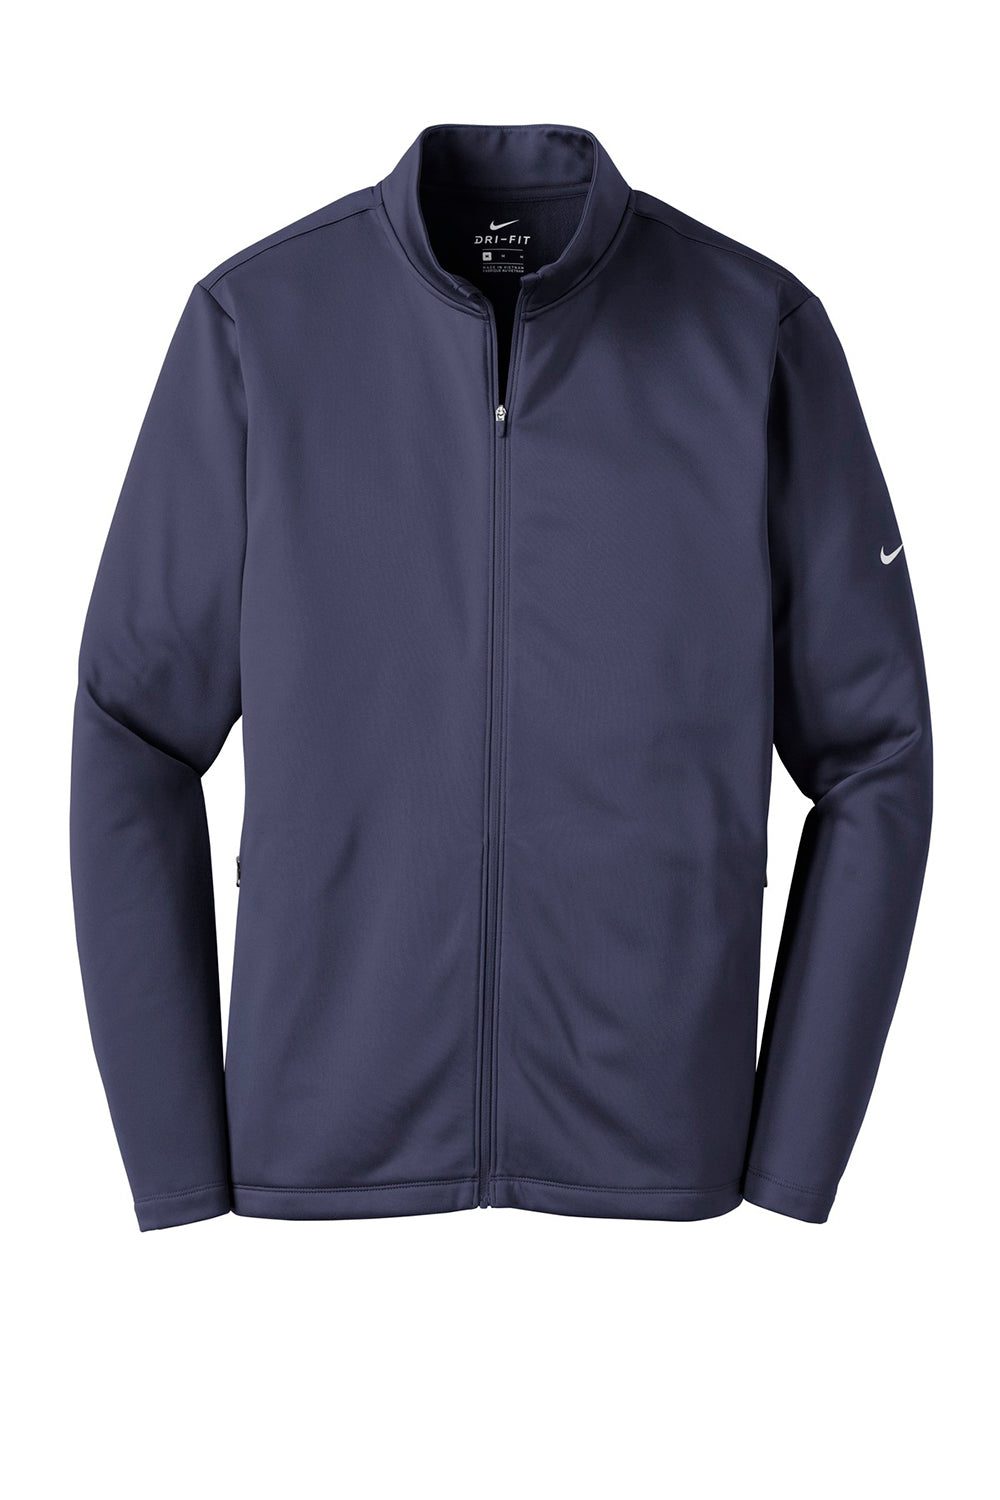 Nike NKAH6418 Mens Therma-Fit Moisture Wicking Fleece Full Zip Sweatshirt Midnight Navy Blue Flat Front